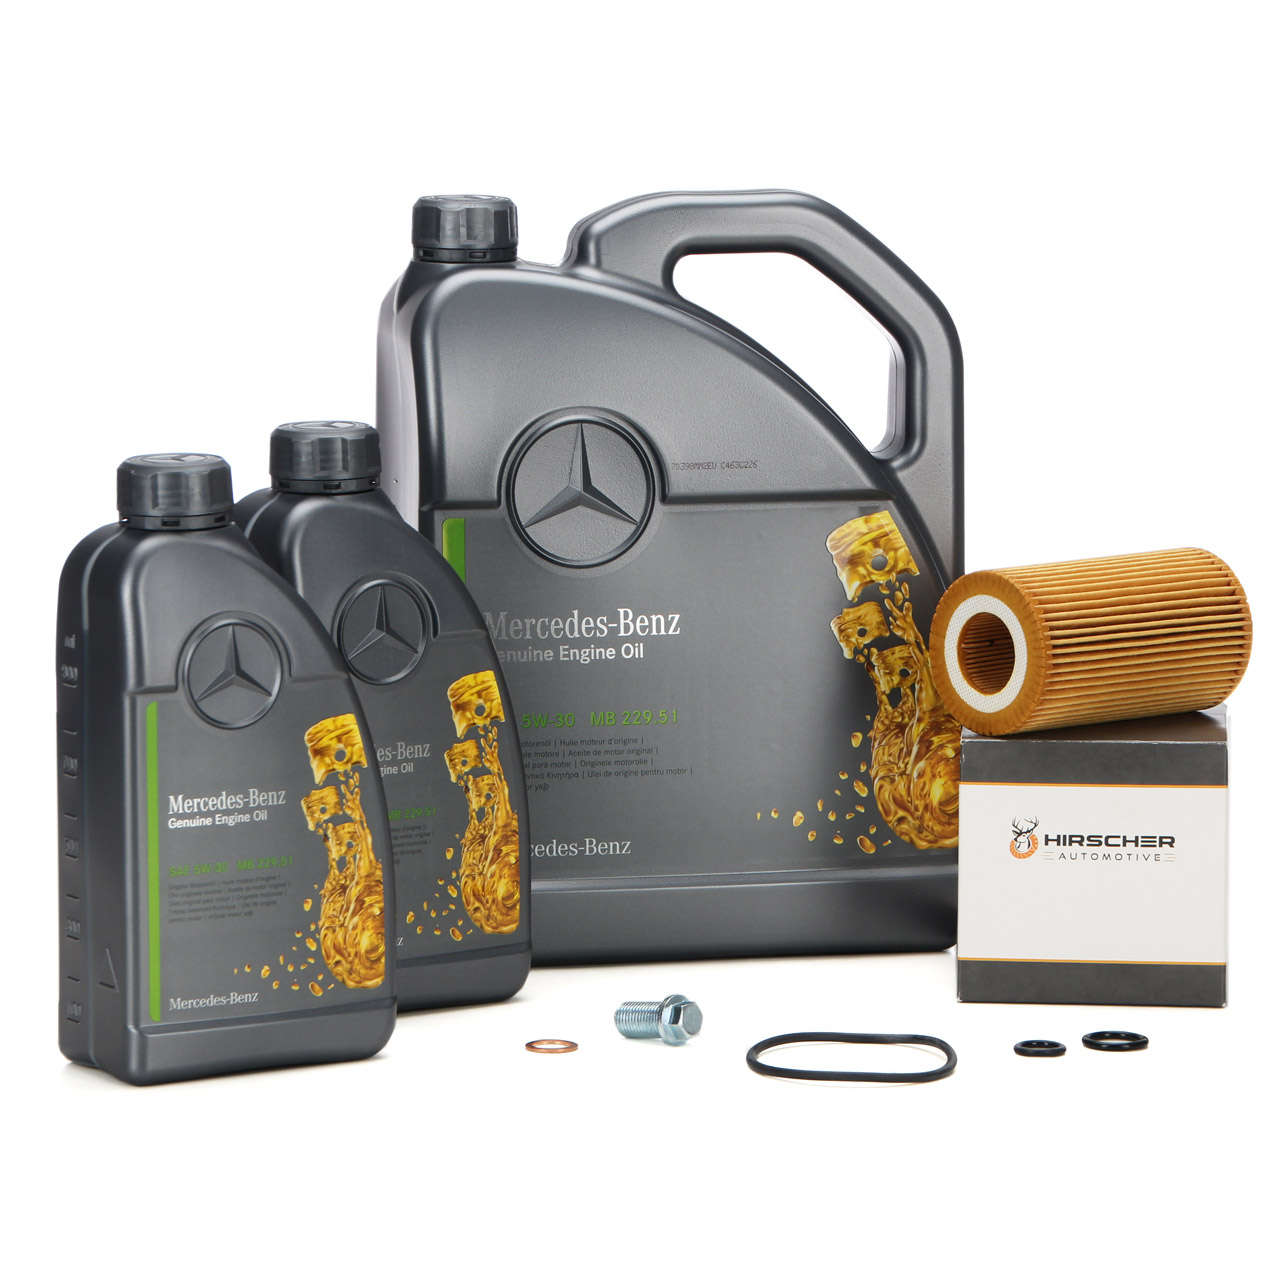 7L ORIGINAL Mercedes Motoröl Öl 5W30 MB 229.51 + HIRSCHER Ölfilter 6511800109